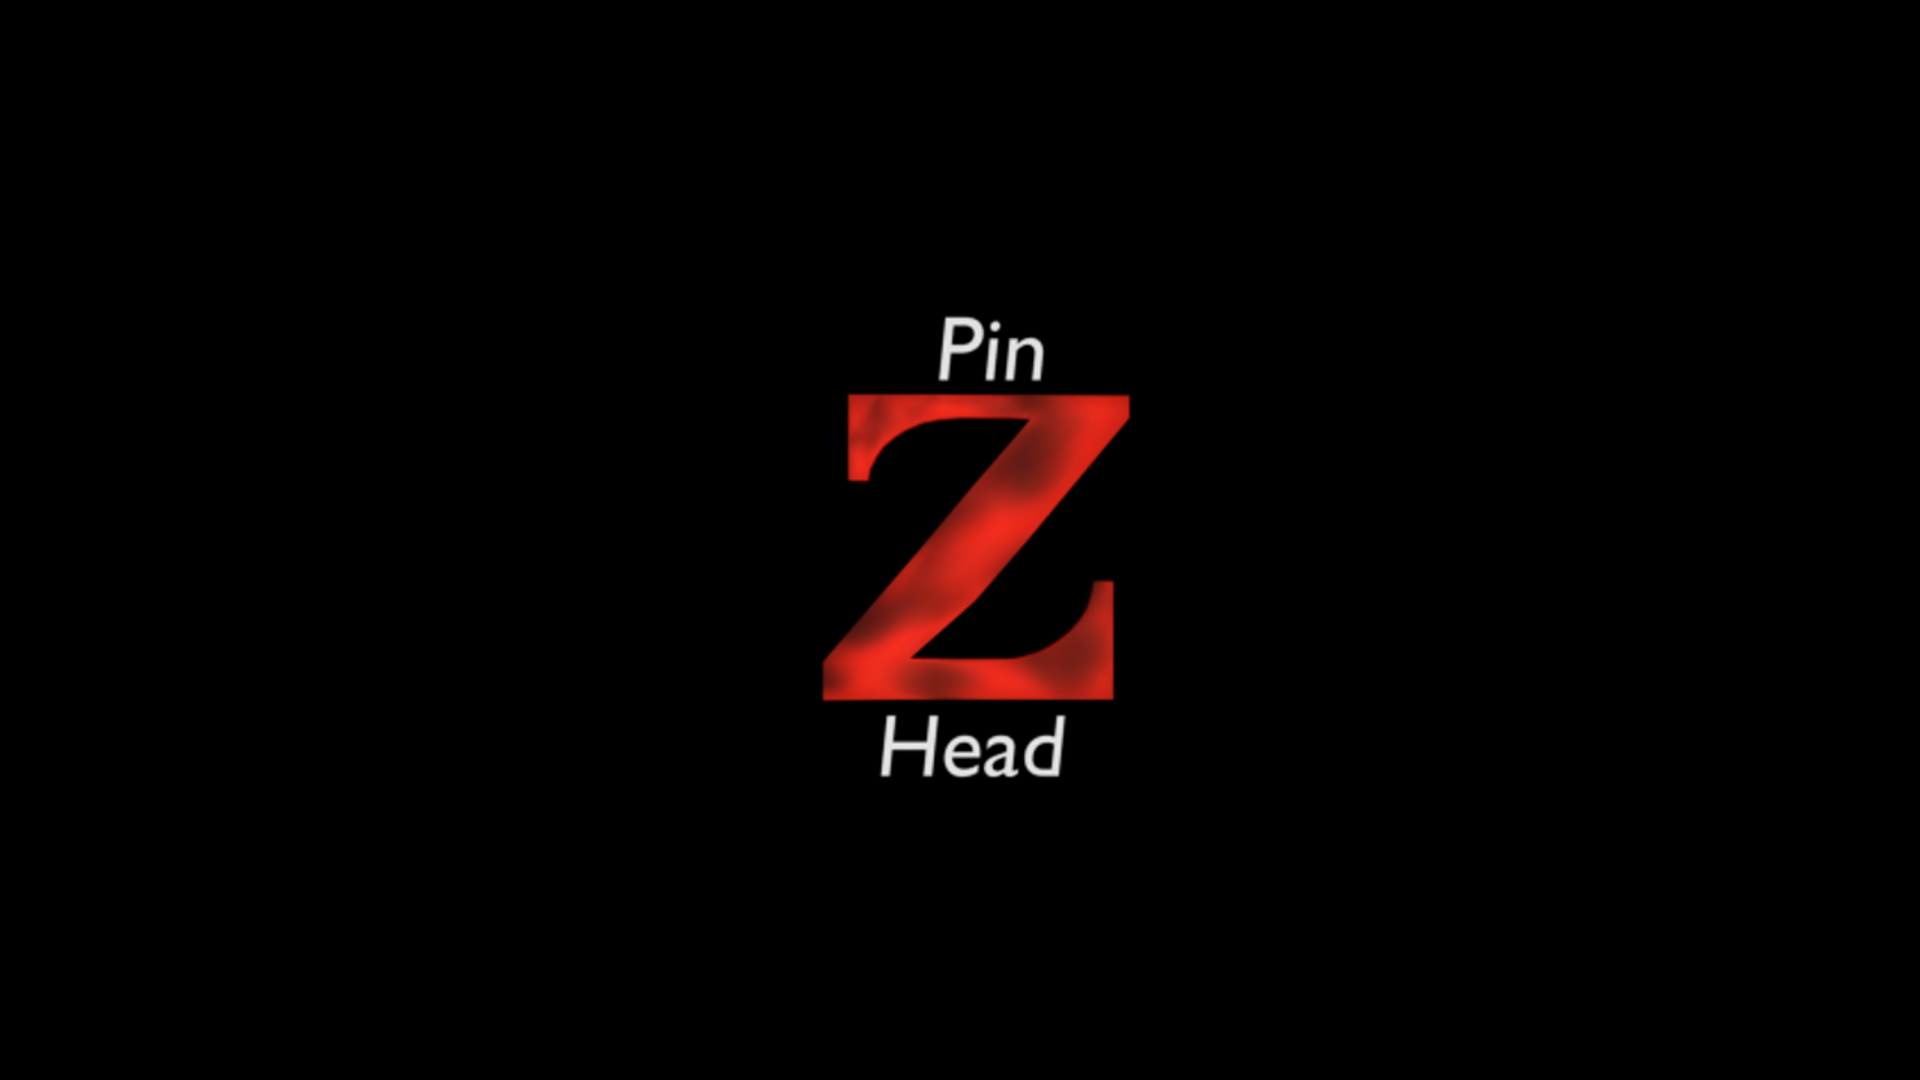 Pin Z Head 3D Logo